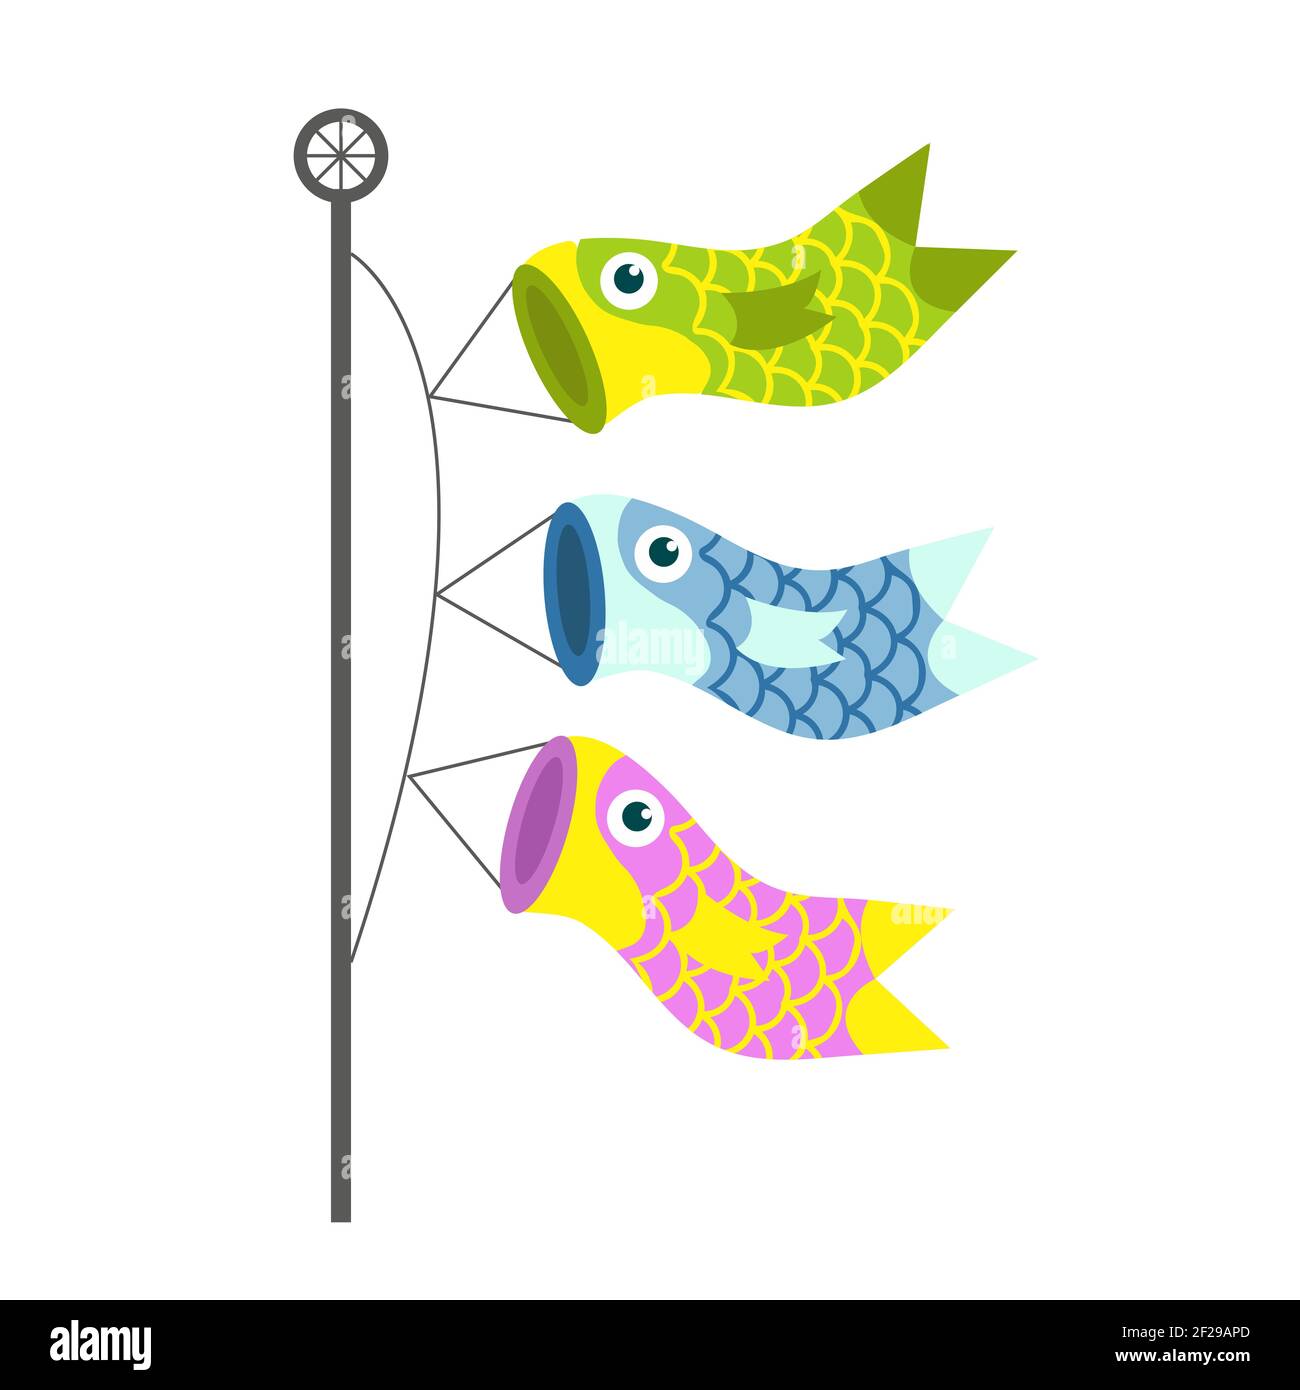 Koinobori carp streamer fish kites. Happy childrens day. Cartoon Fish flag for japanese festival. Vector illustration Stock Vector